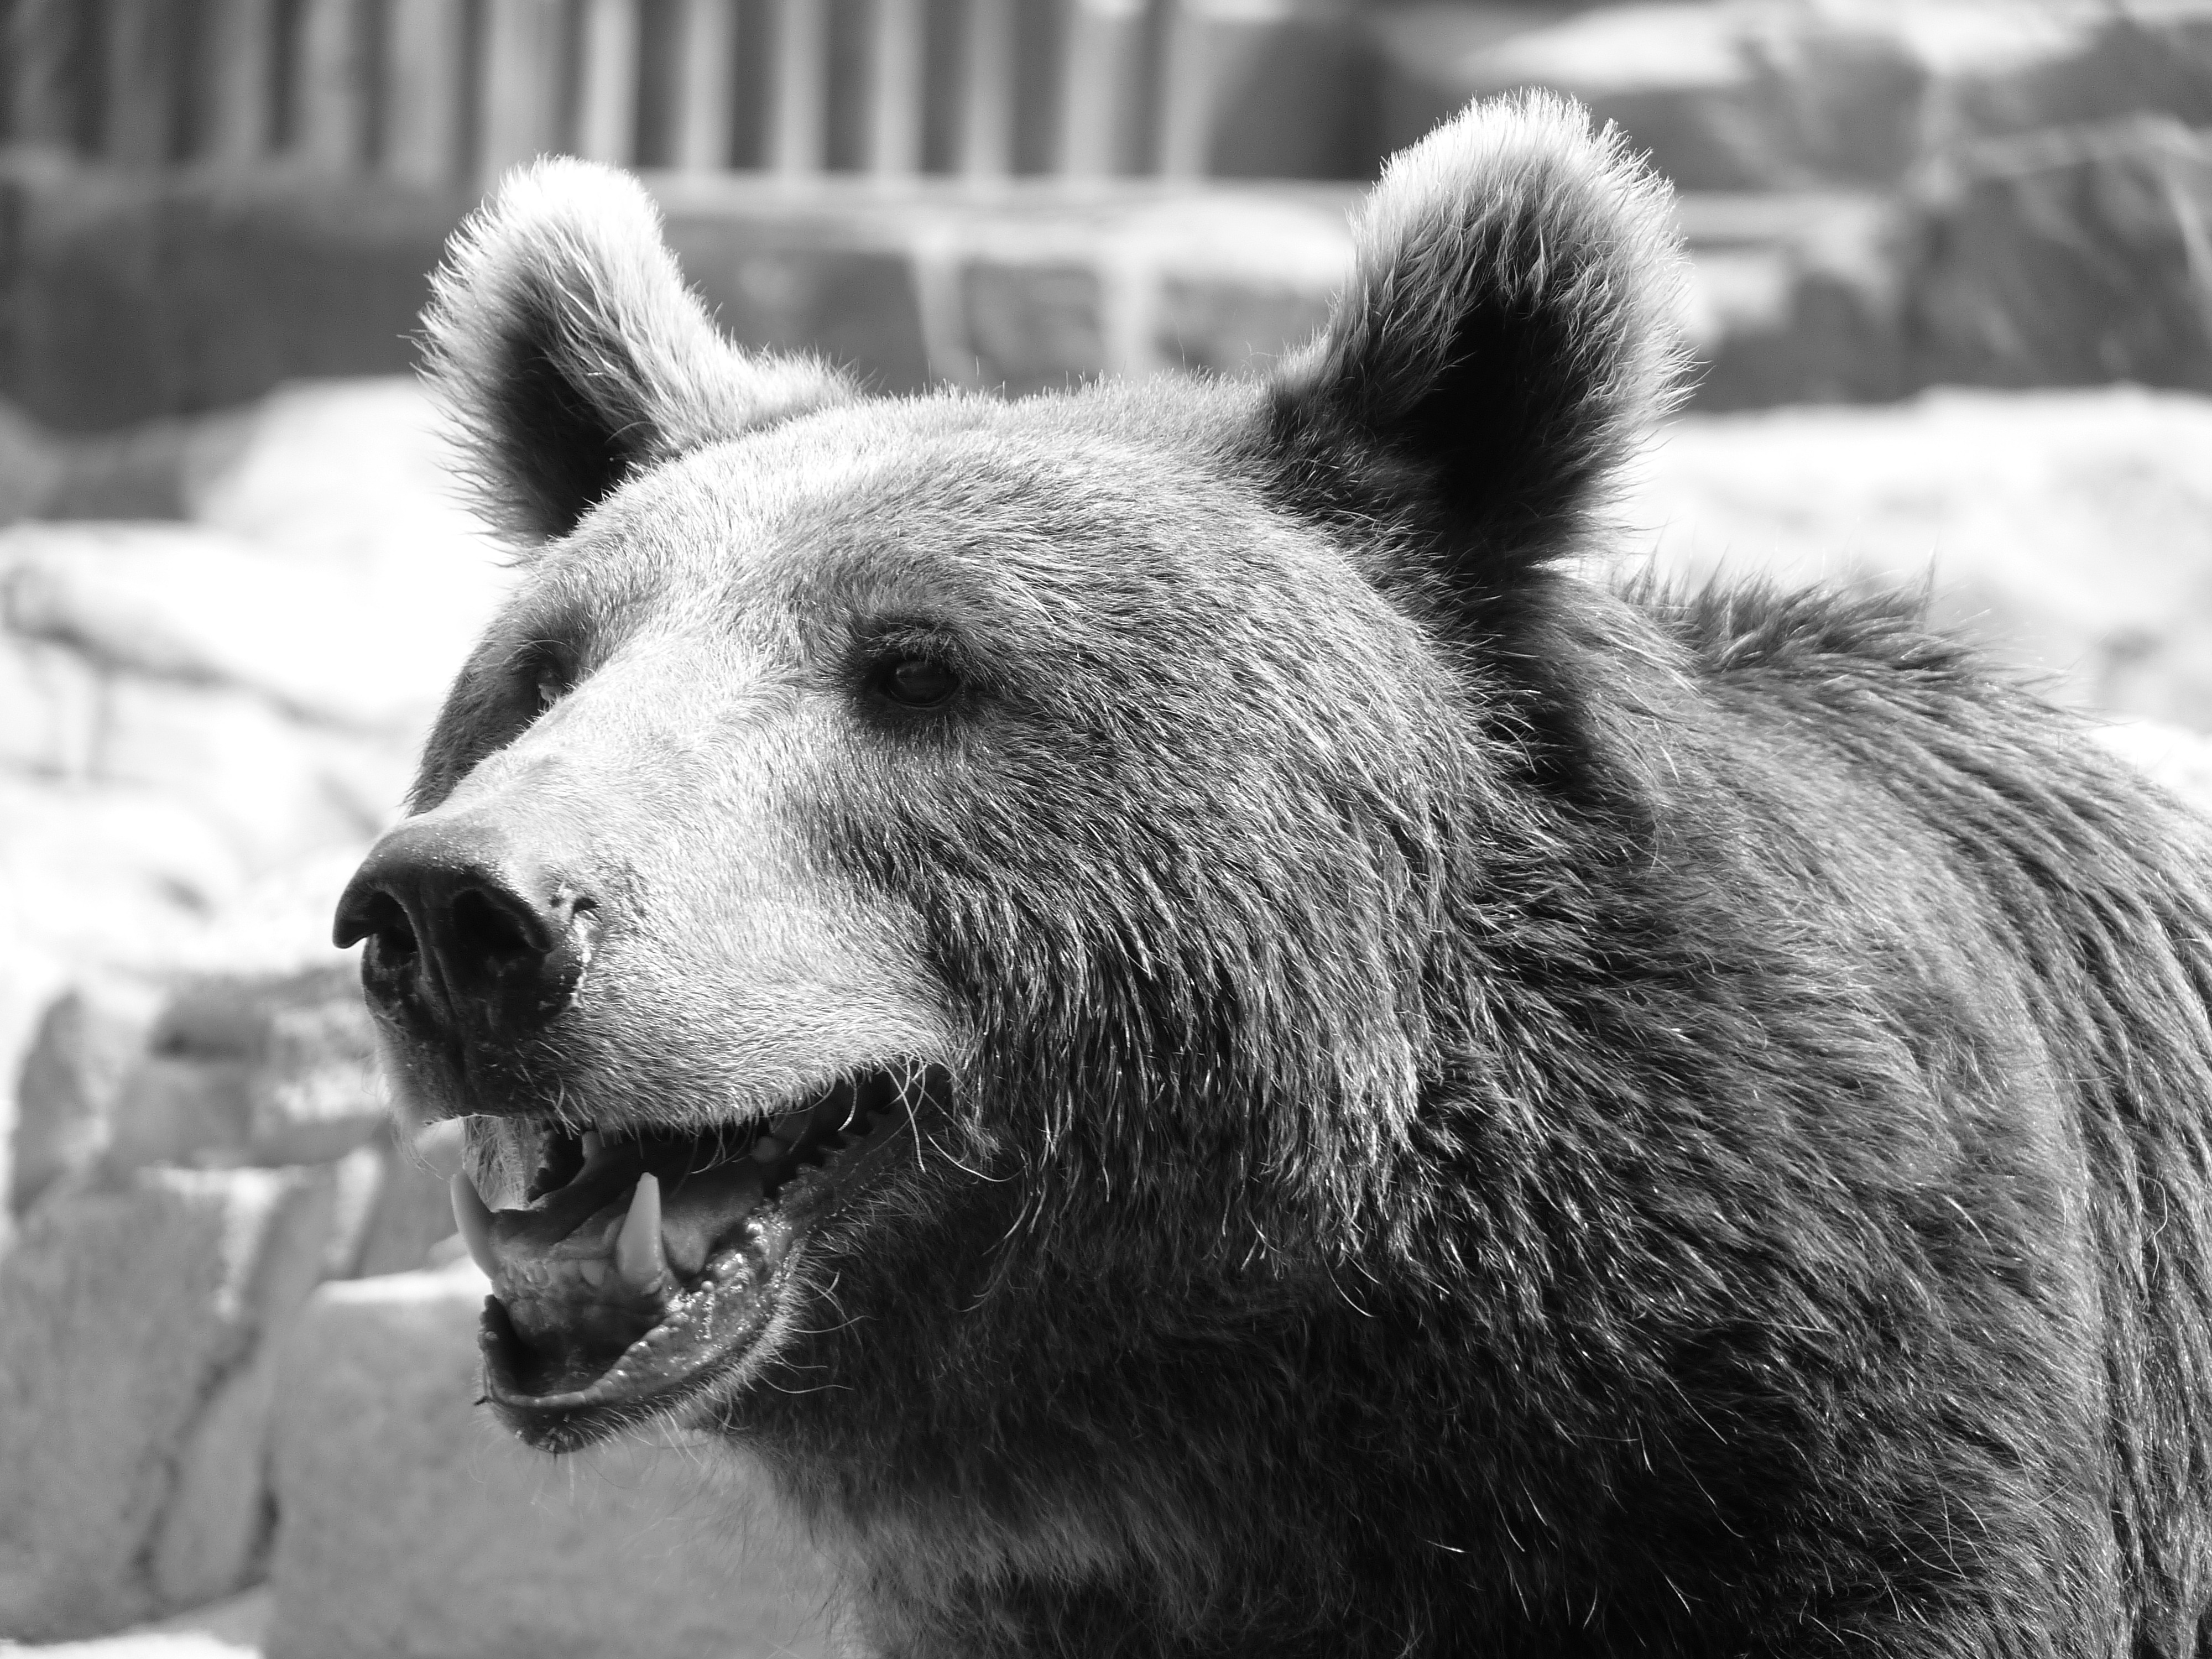 greyscale photo of bear